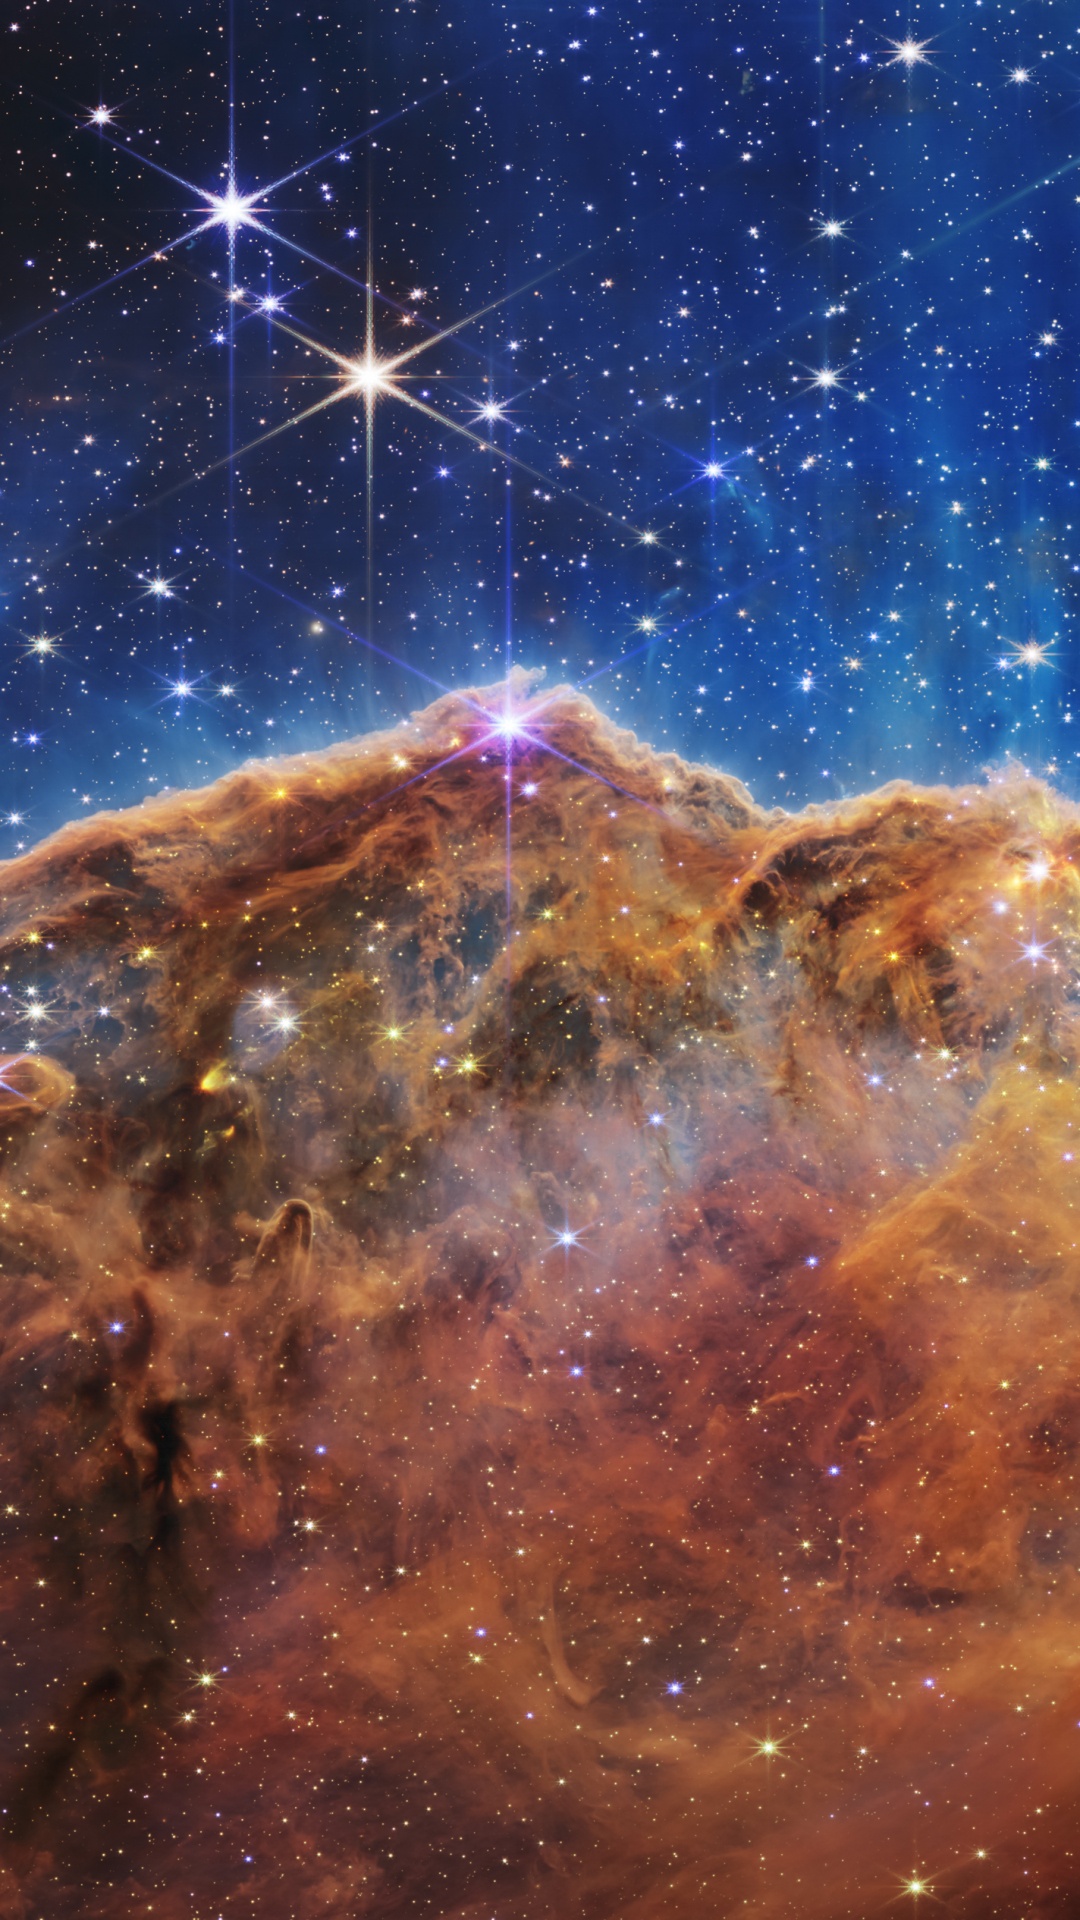 Astronomy iPhone Wallpaper | iDrop News